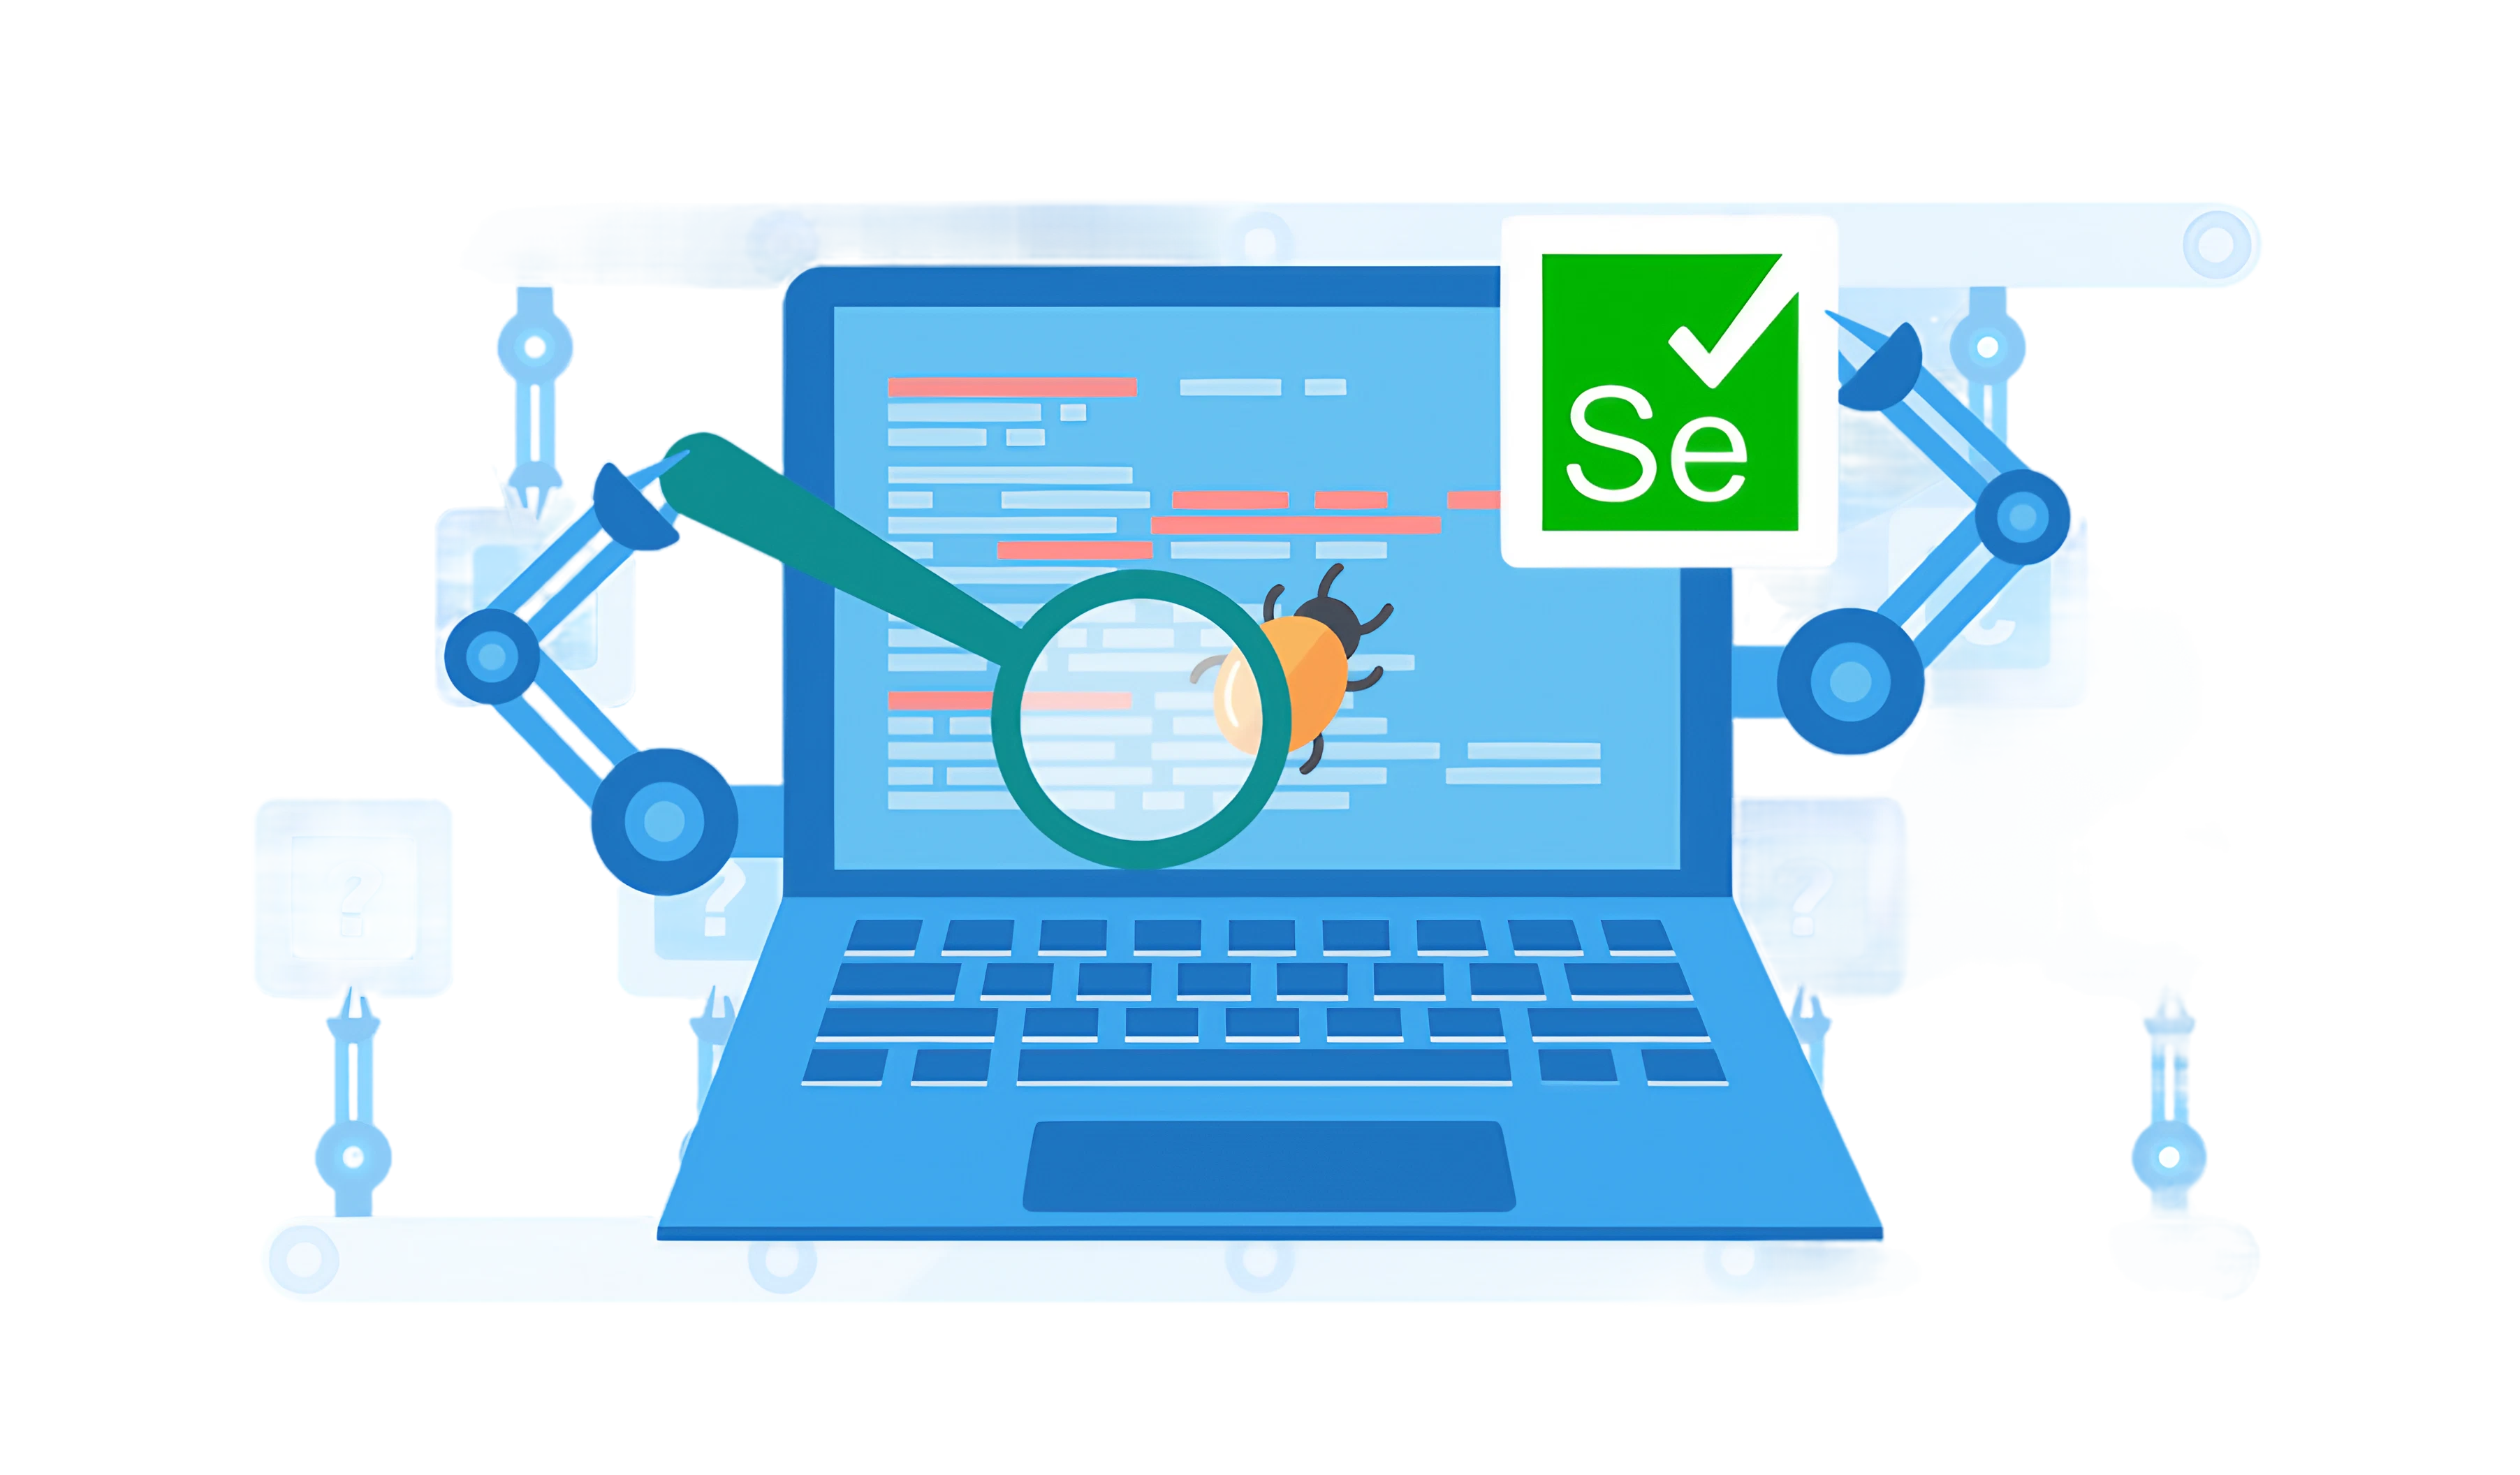 selenium software development tool illustration